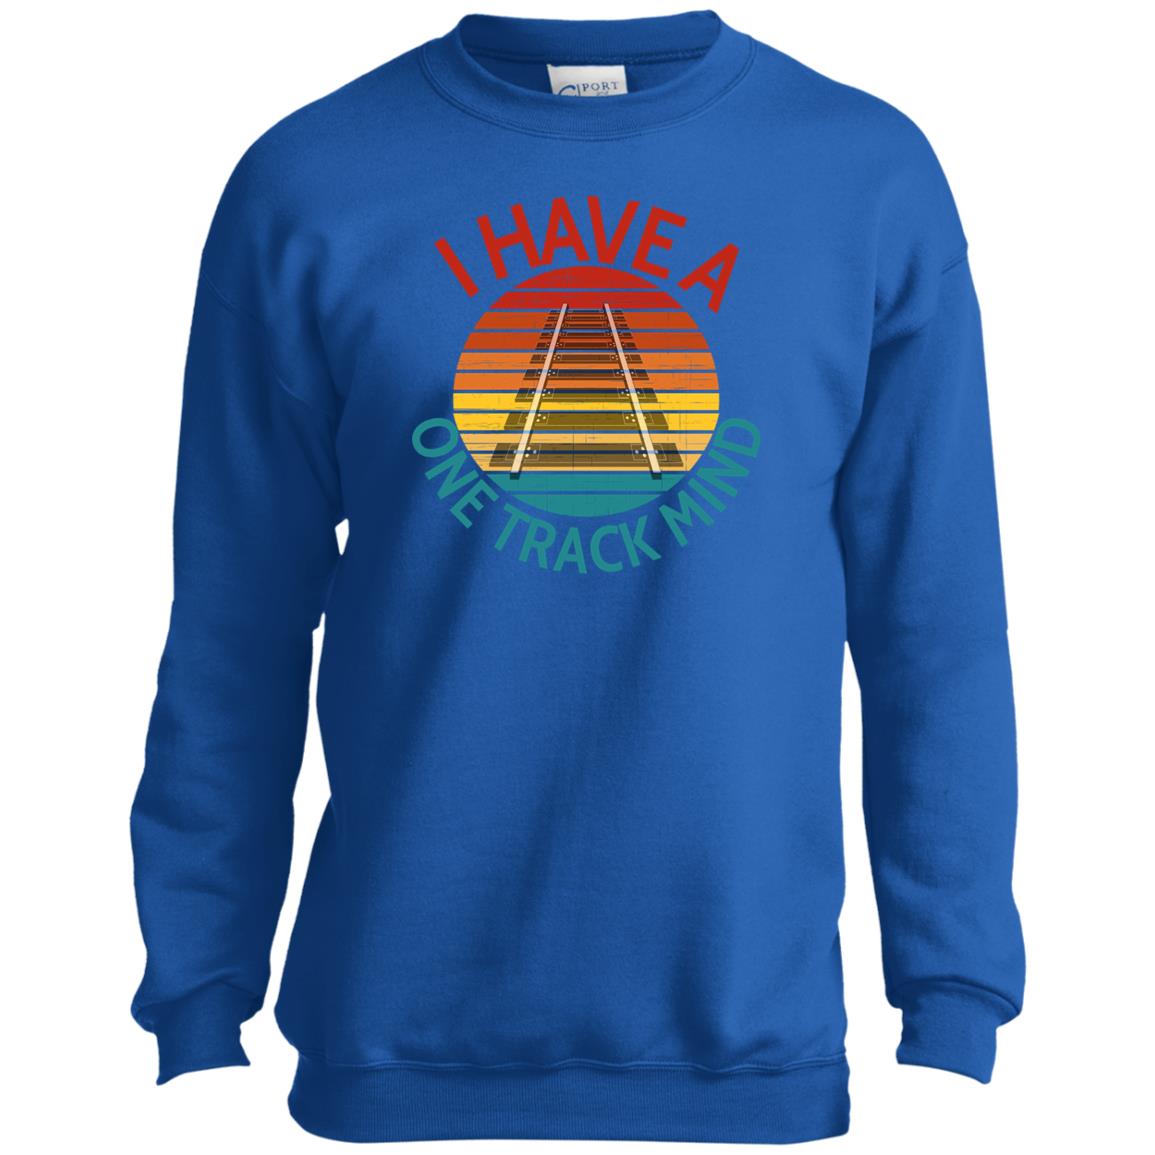 One Track Mind Youth Crewneck Sweatshirt - Broken Knuckle Apparel